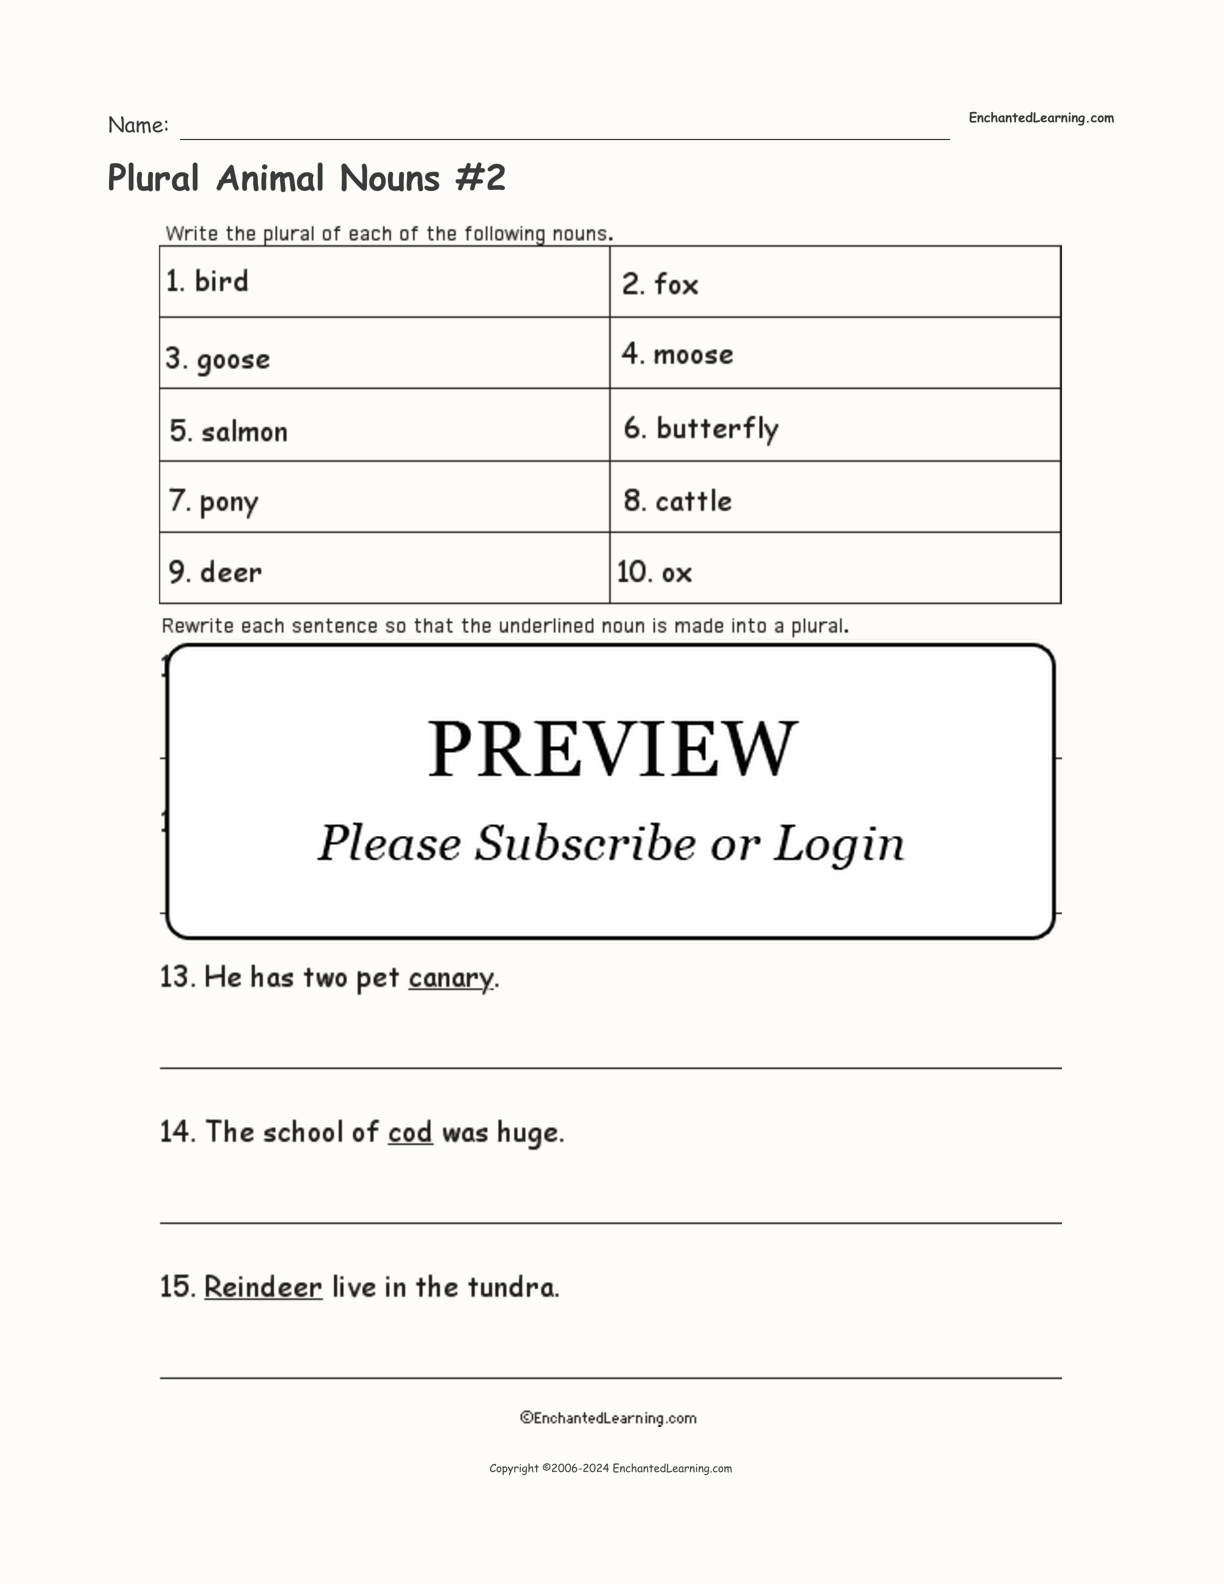 Plural Animal Nouns #2 interactive worksheet page 1